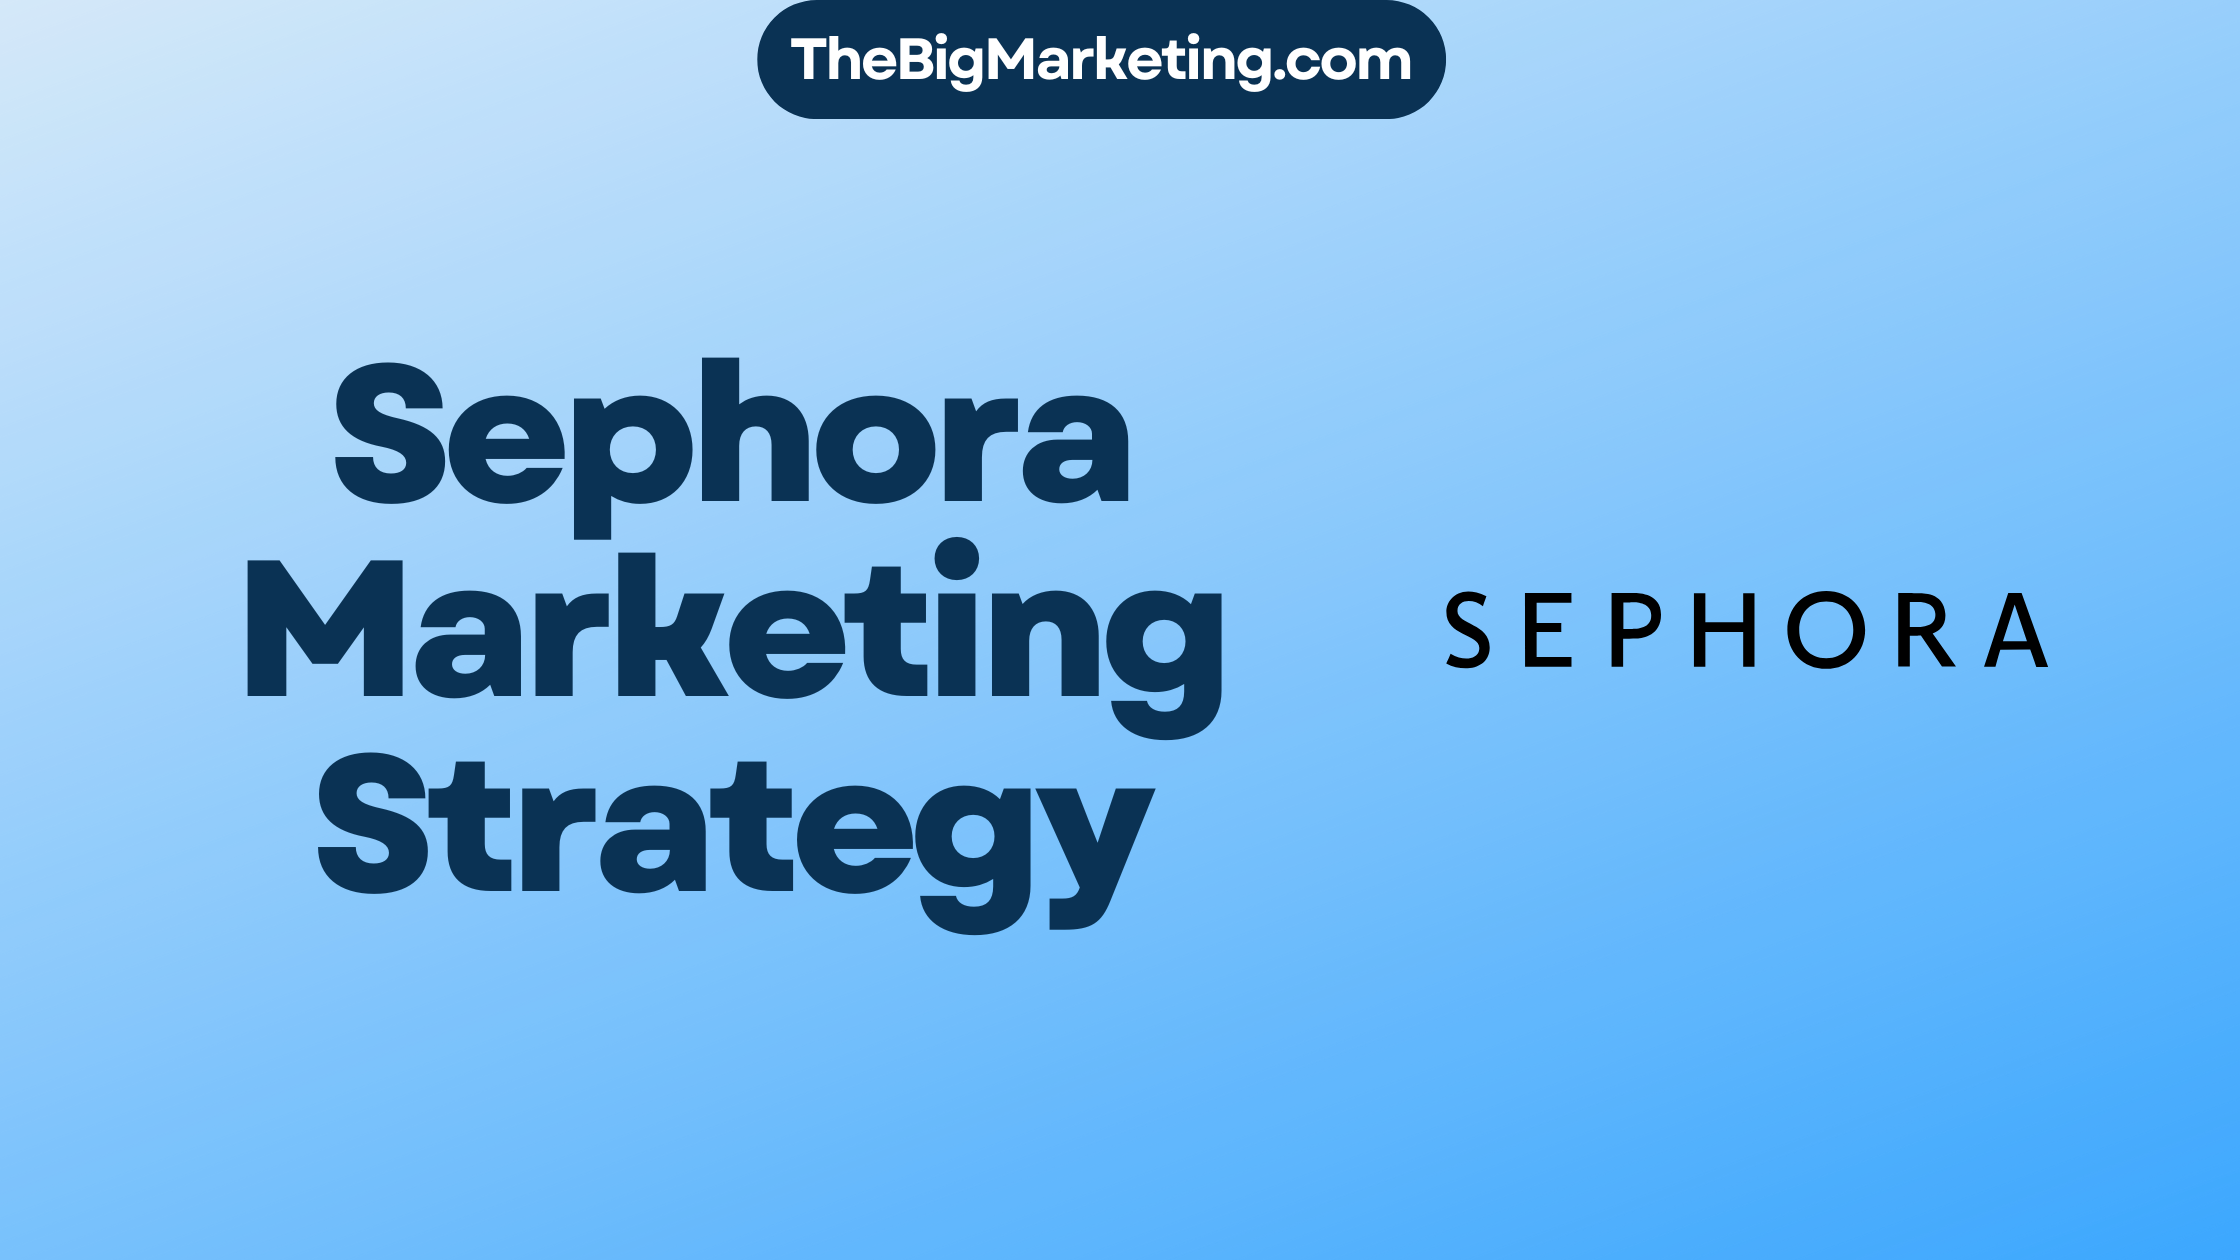 Sephora Marketing Strategy